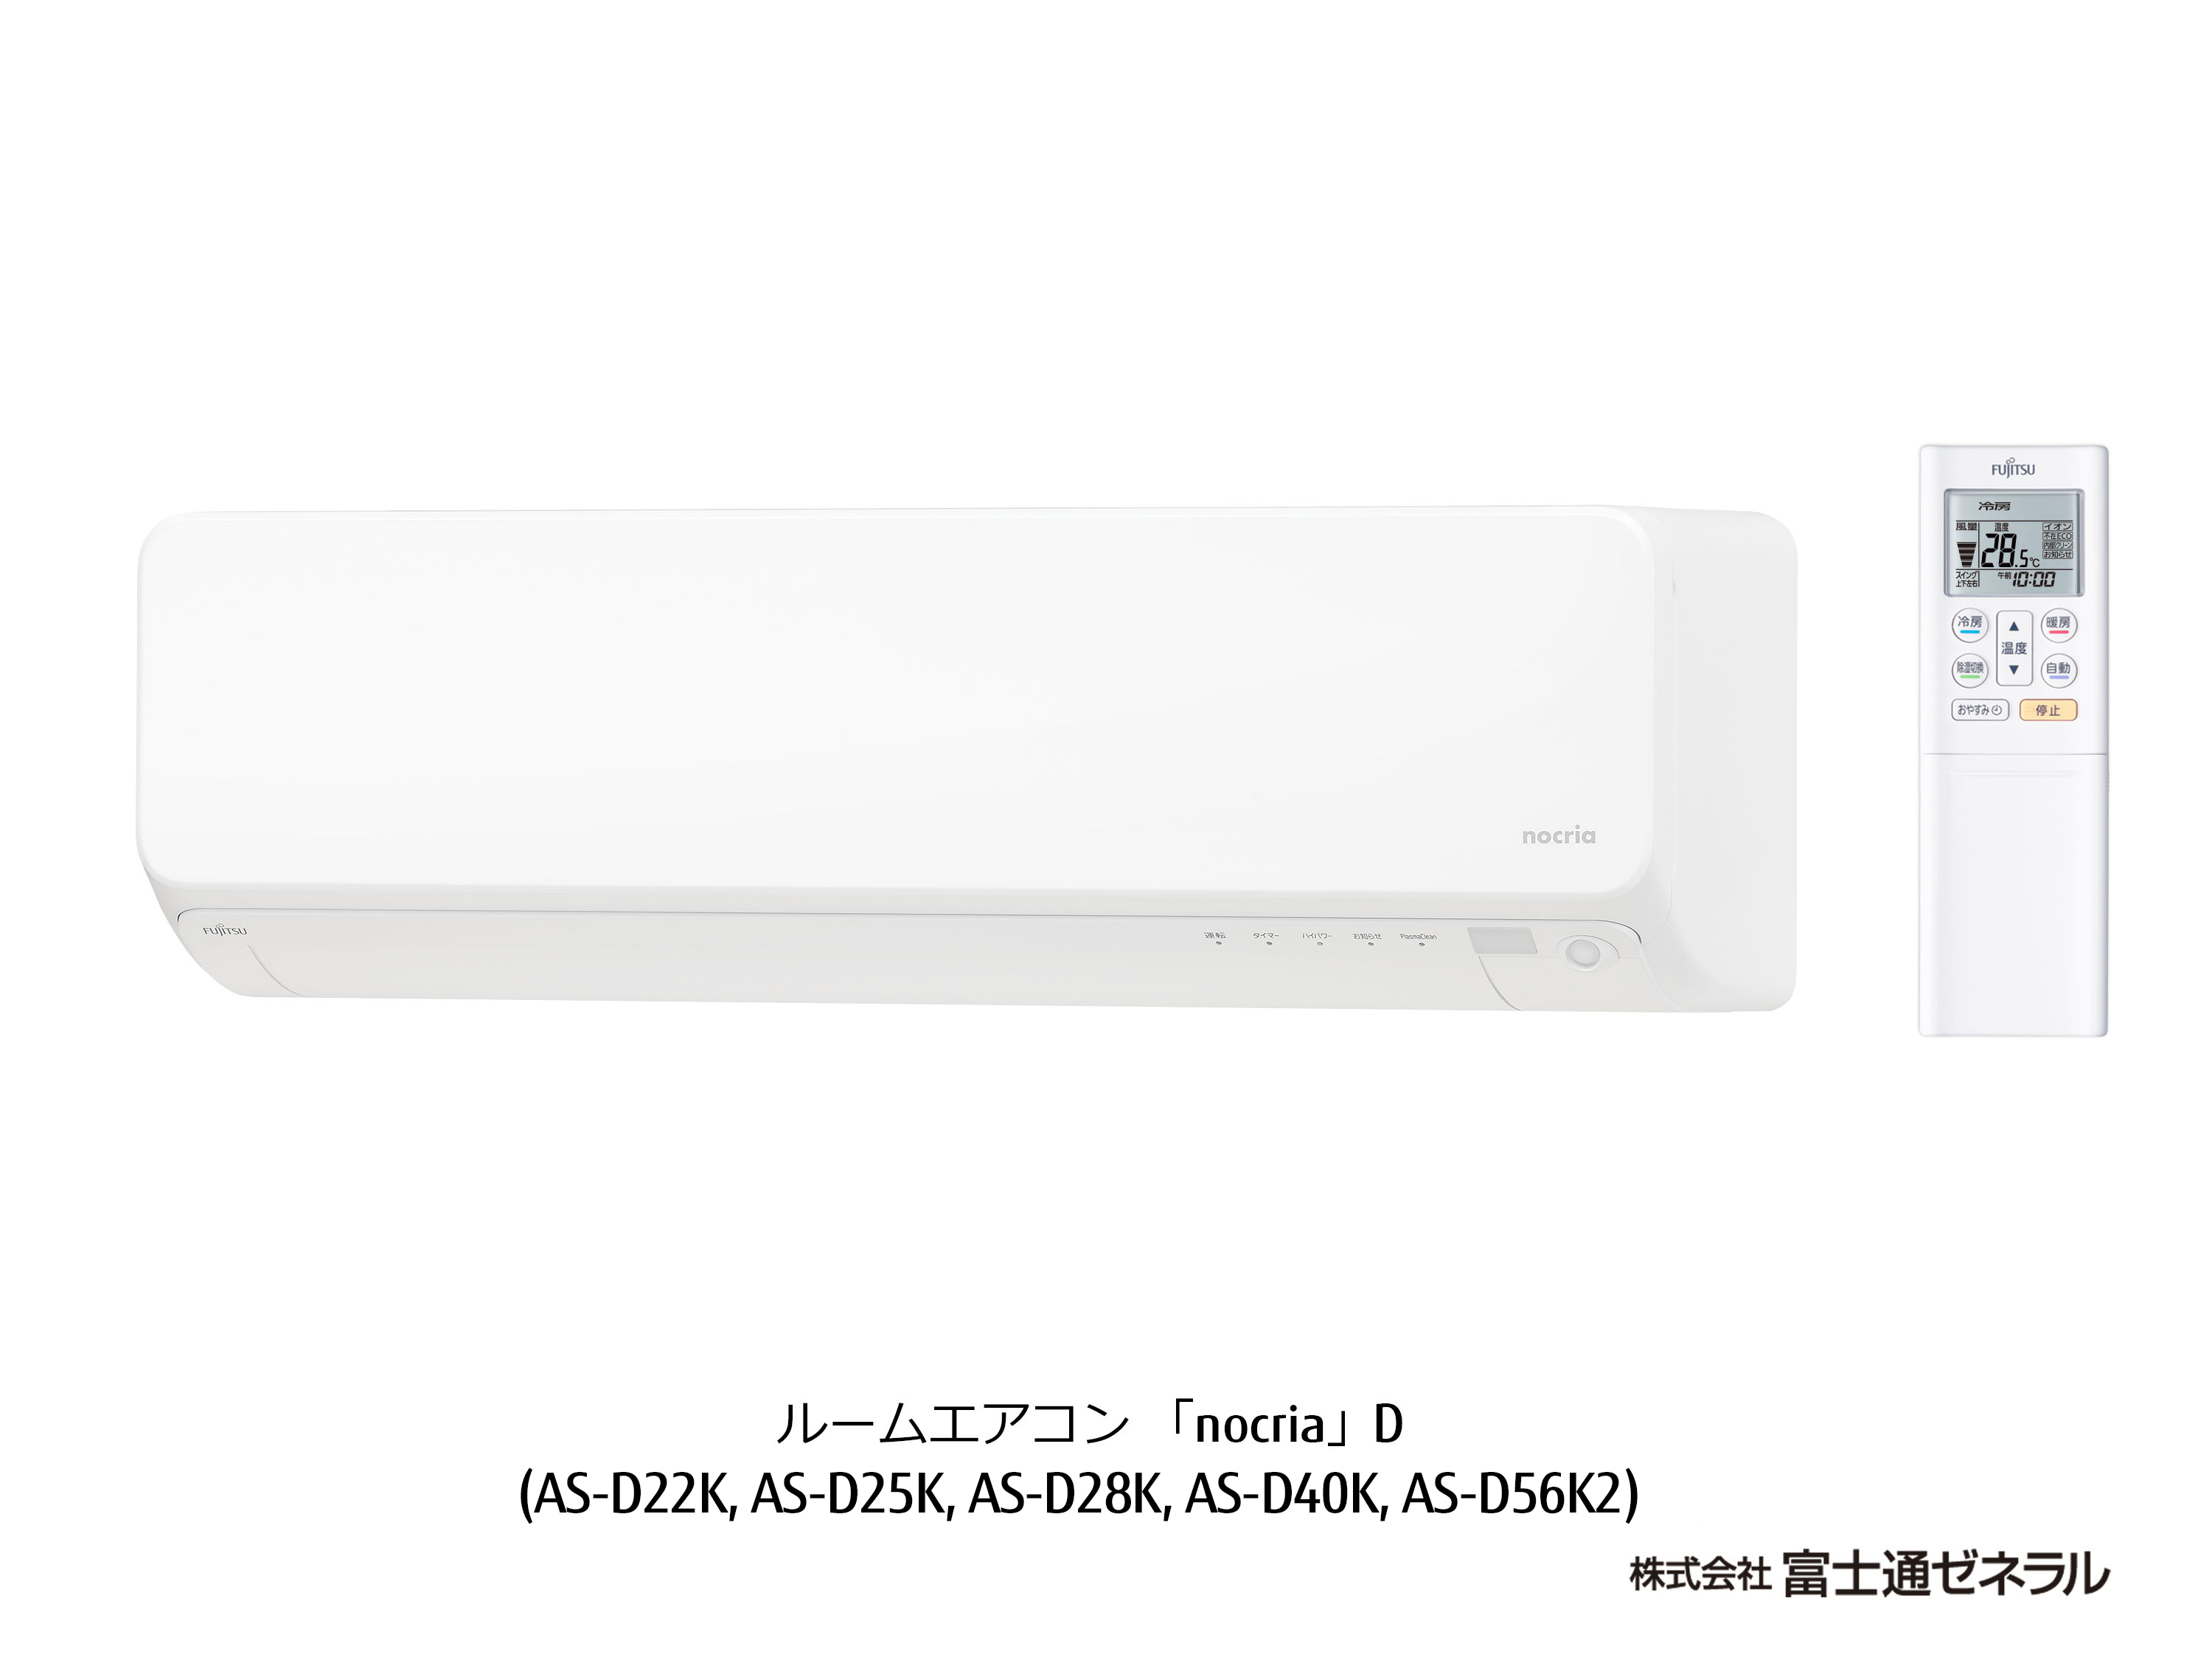 AS-D22K スペック 2020年 エアコン nocria®D - 富士通ゼネラル JP